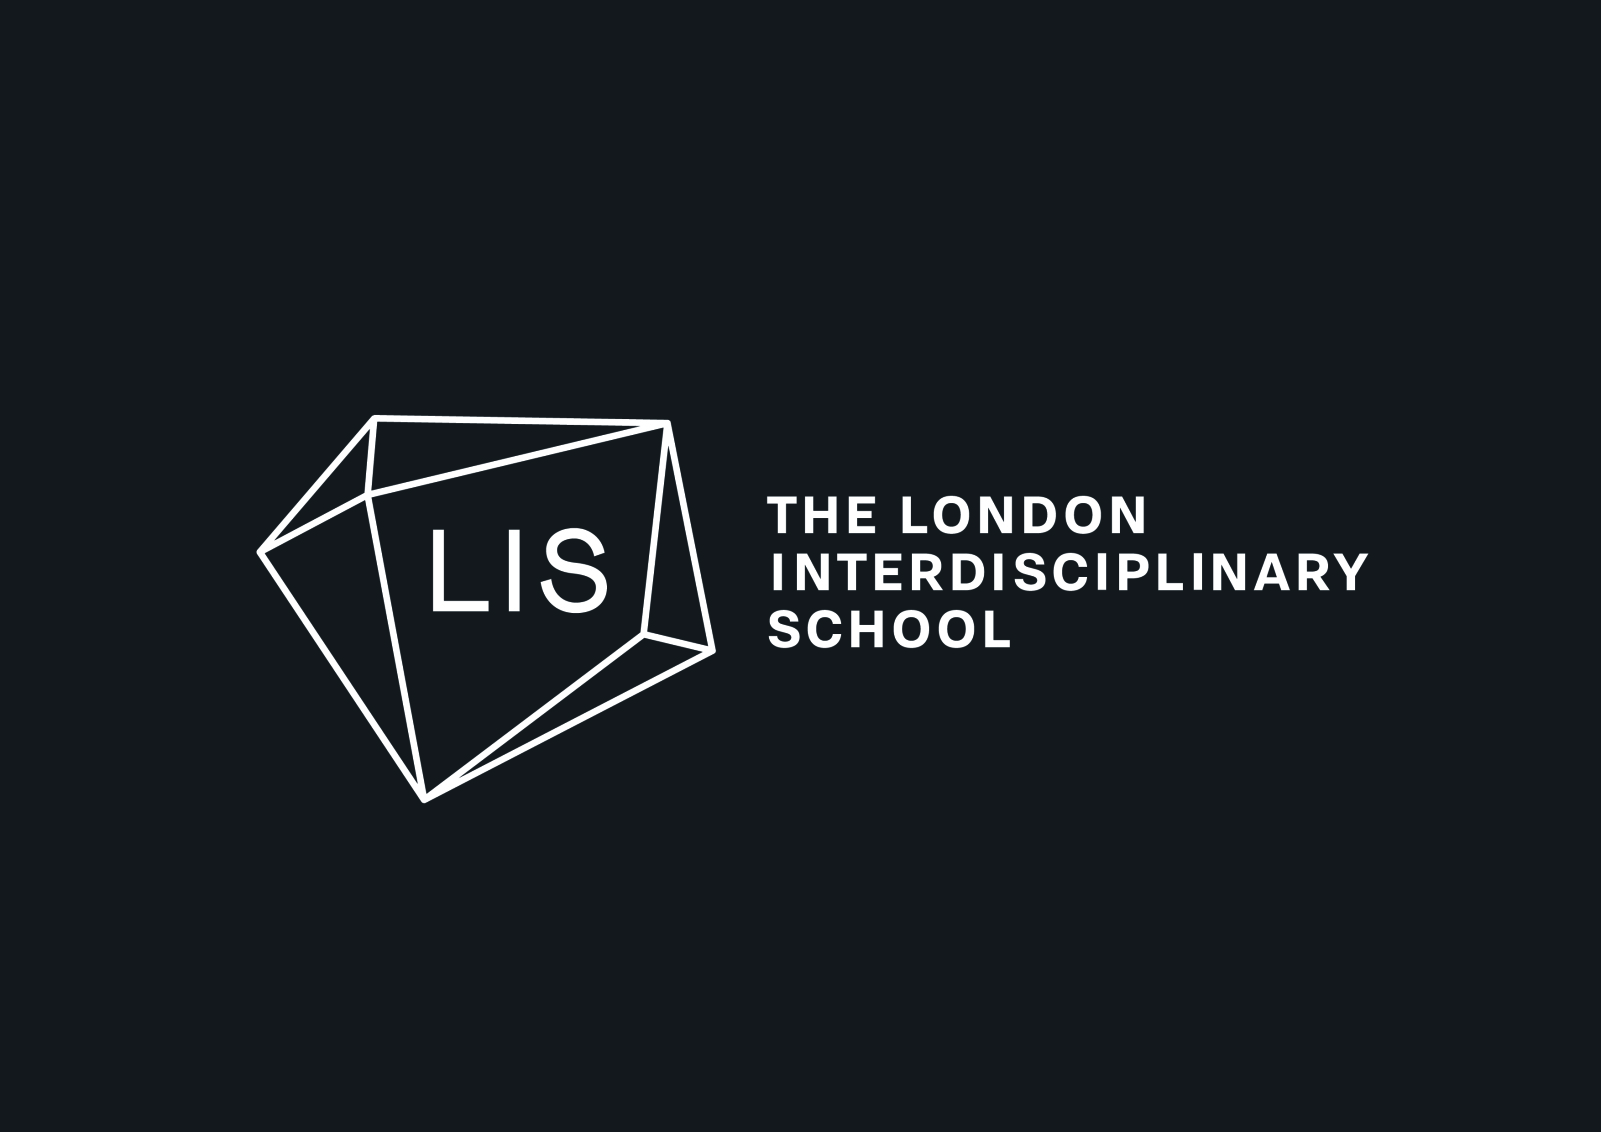 The London Interdisciplinary School logo